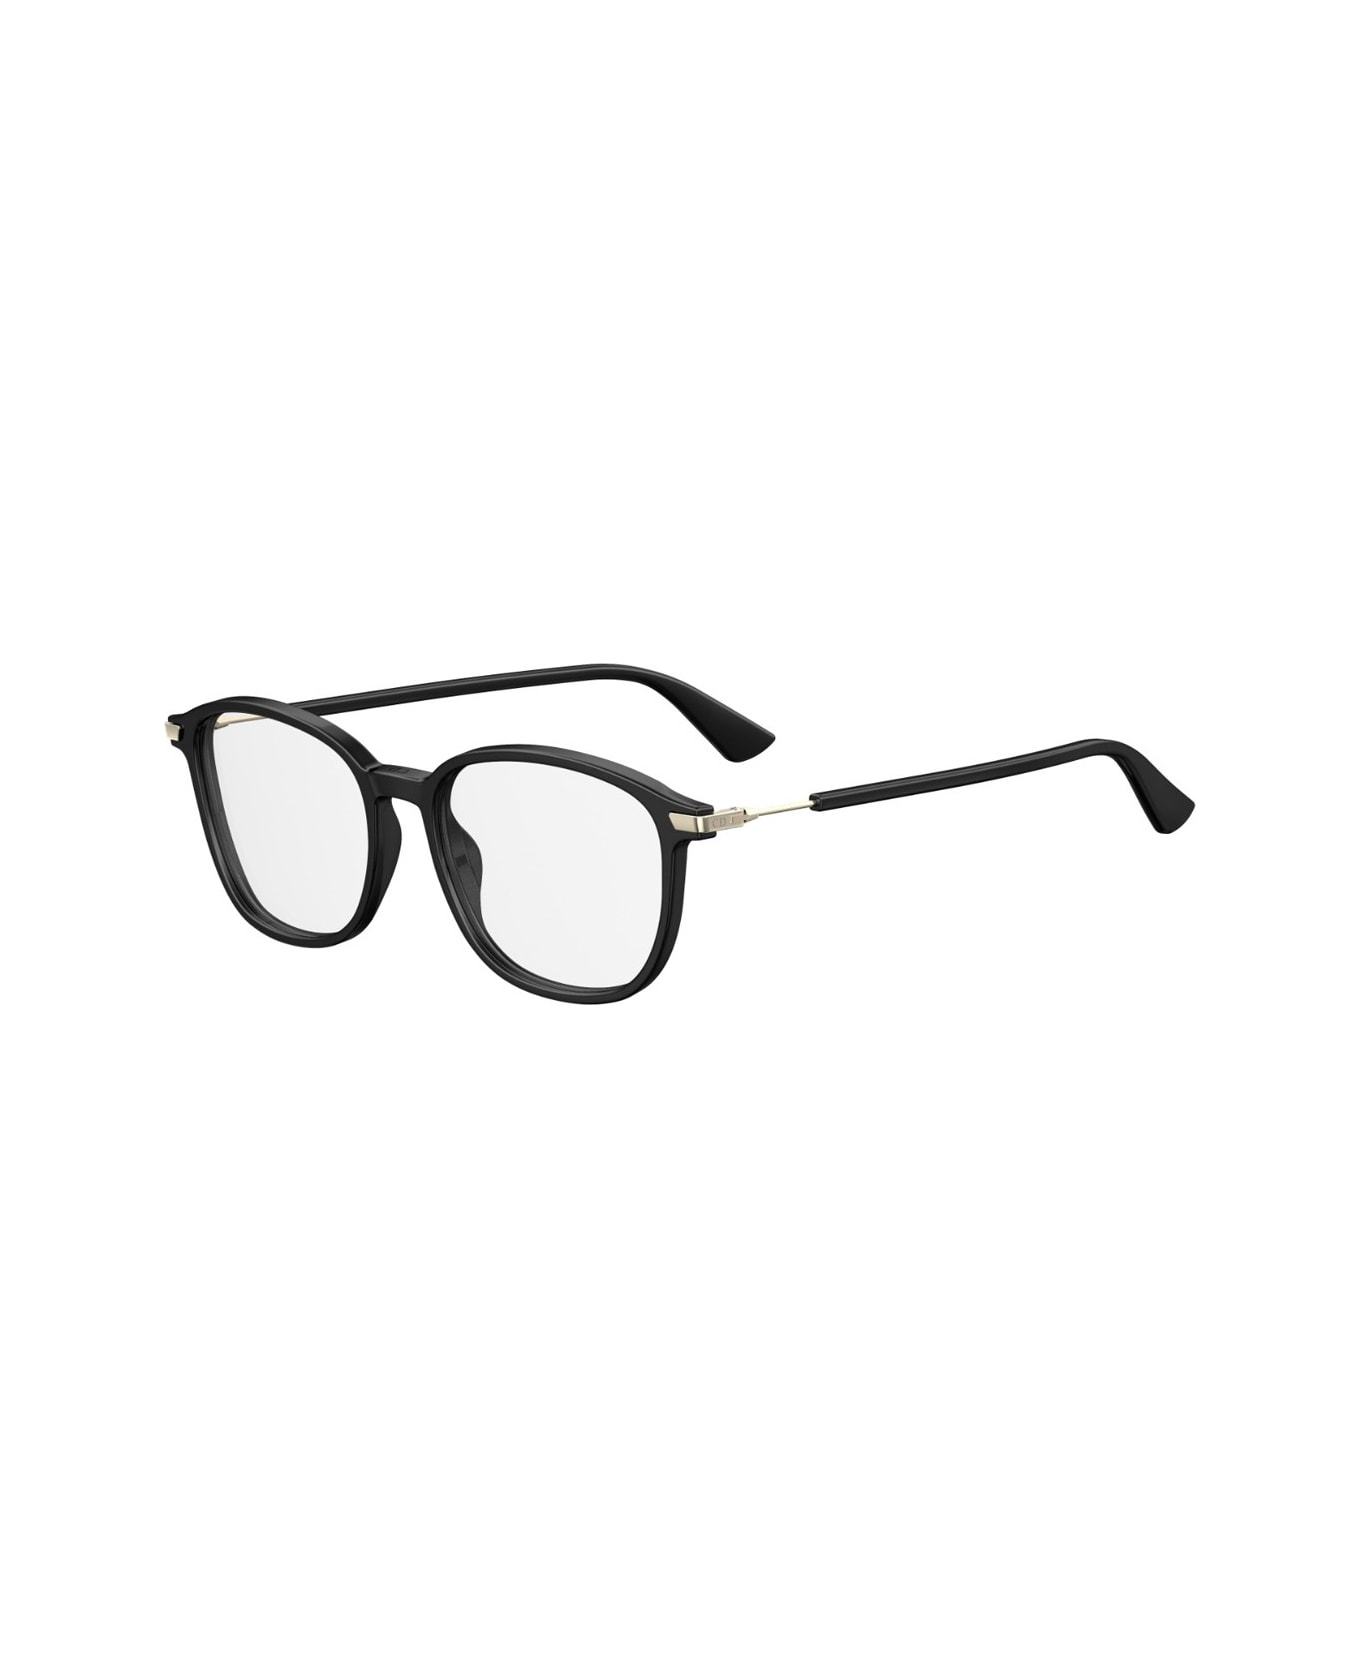 Dior Eyewear Essence 7 Glasses - Nero